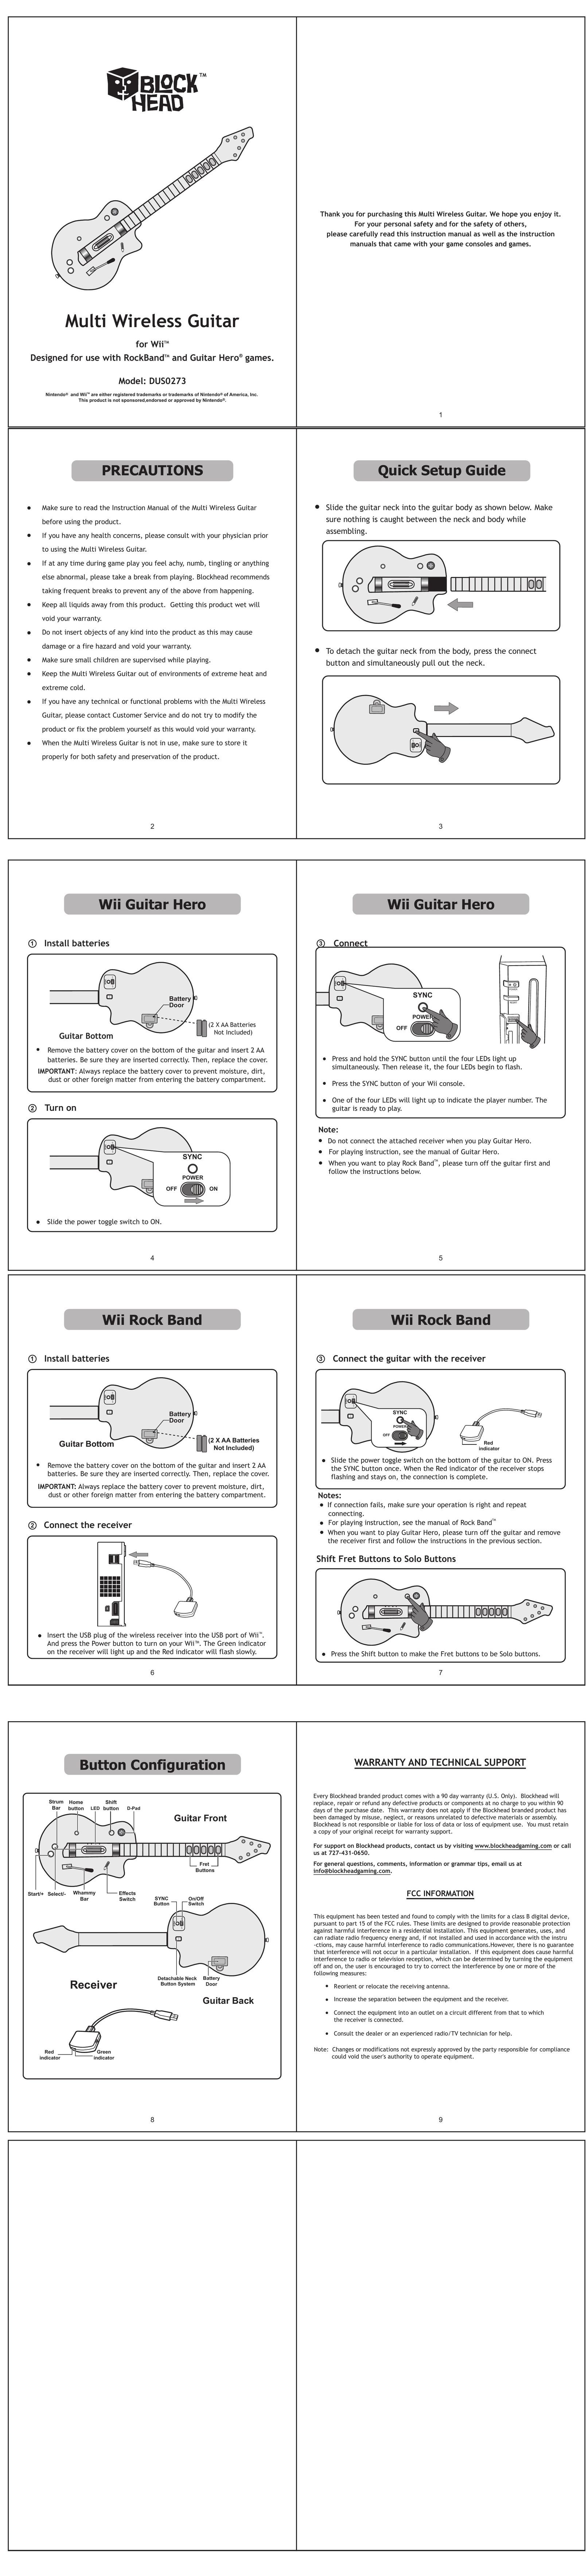 Blockhead DUS0273 Video Game Controller User Manual